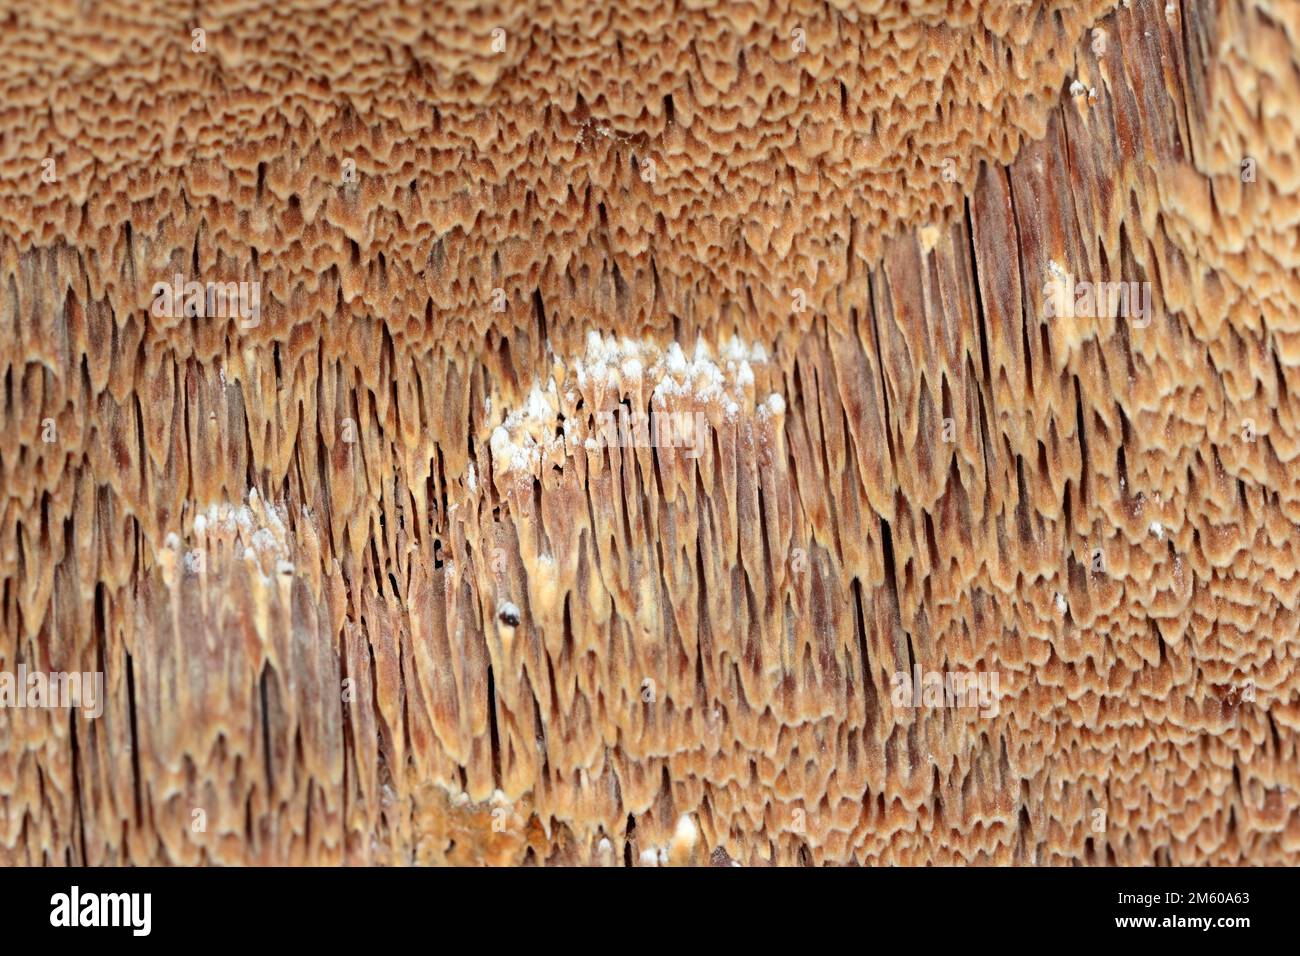 Fungus, mushroom, the fruiting body of a fungus on wood. Stock Photo